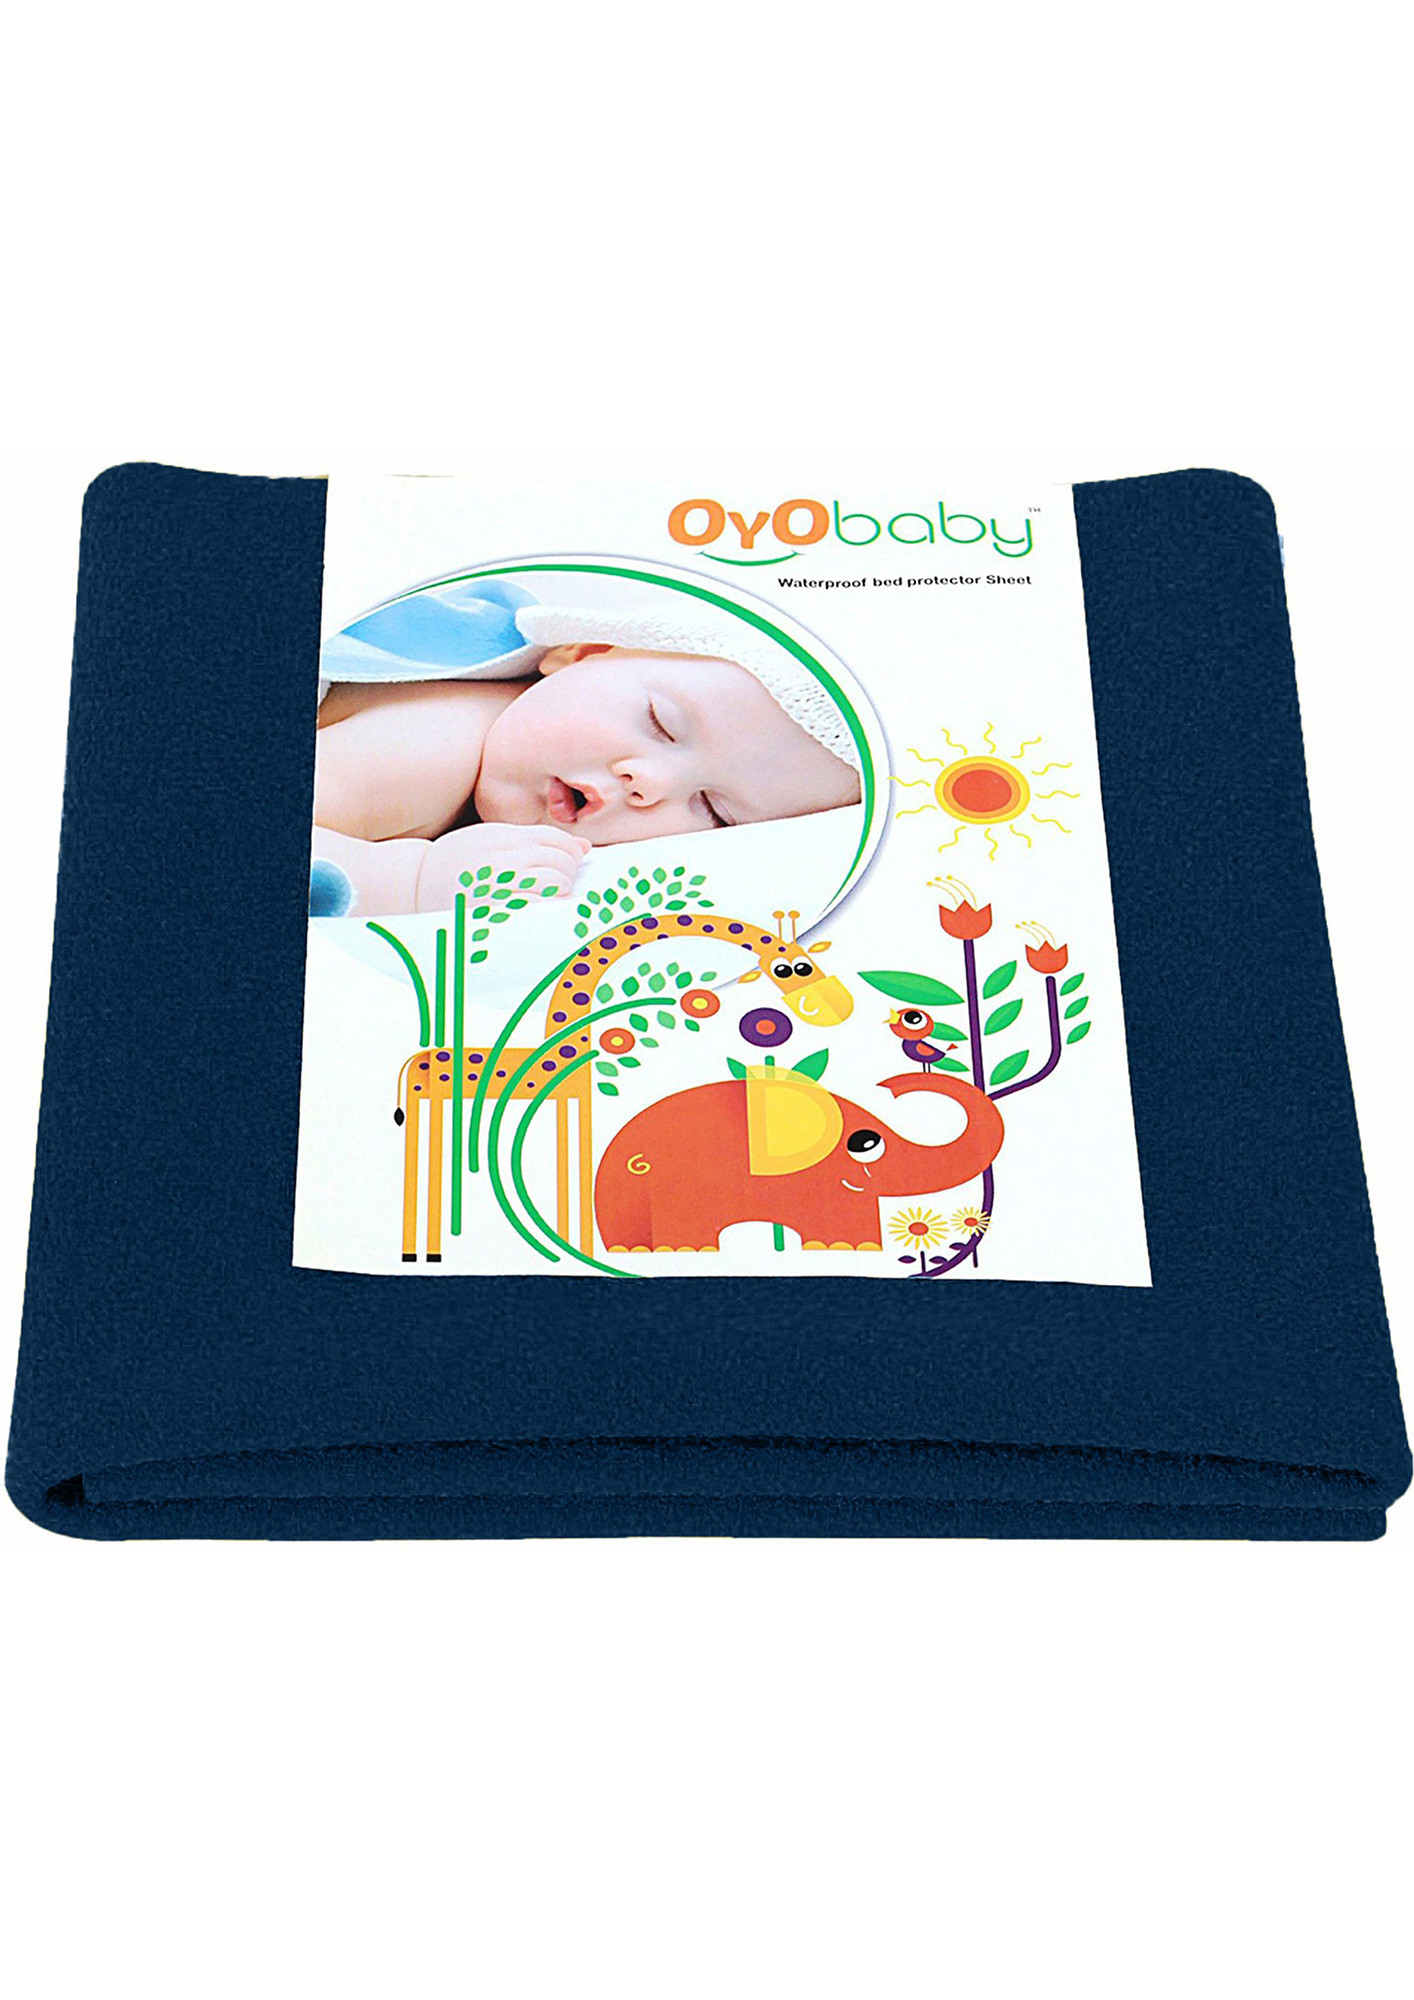 Oyo Baby Cotton Baby Bed Protecting Mat (Dark Sea Blue, Medium)-OB-2021-DS